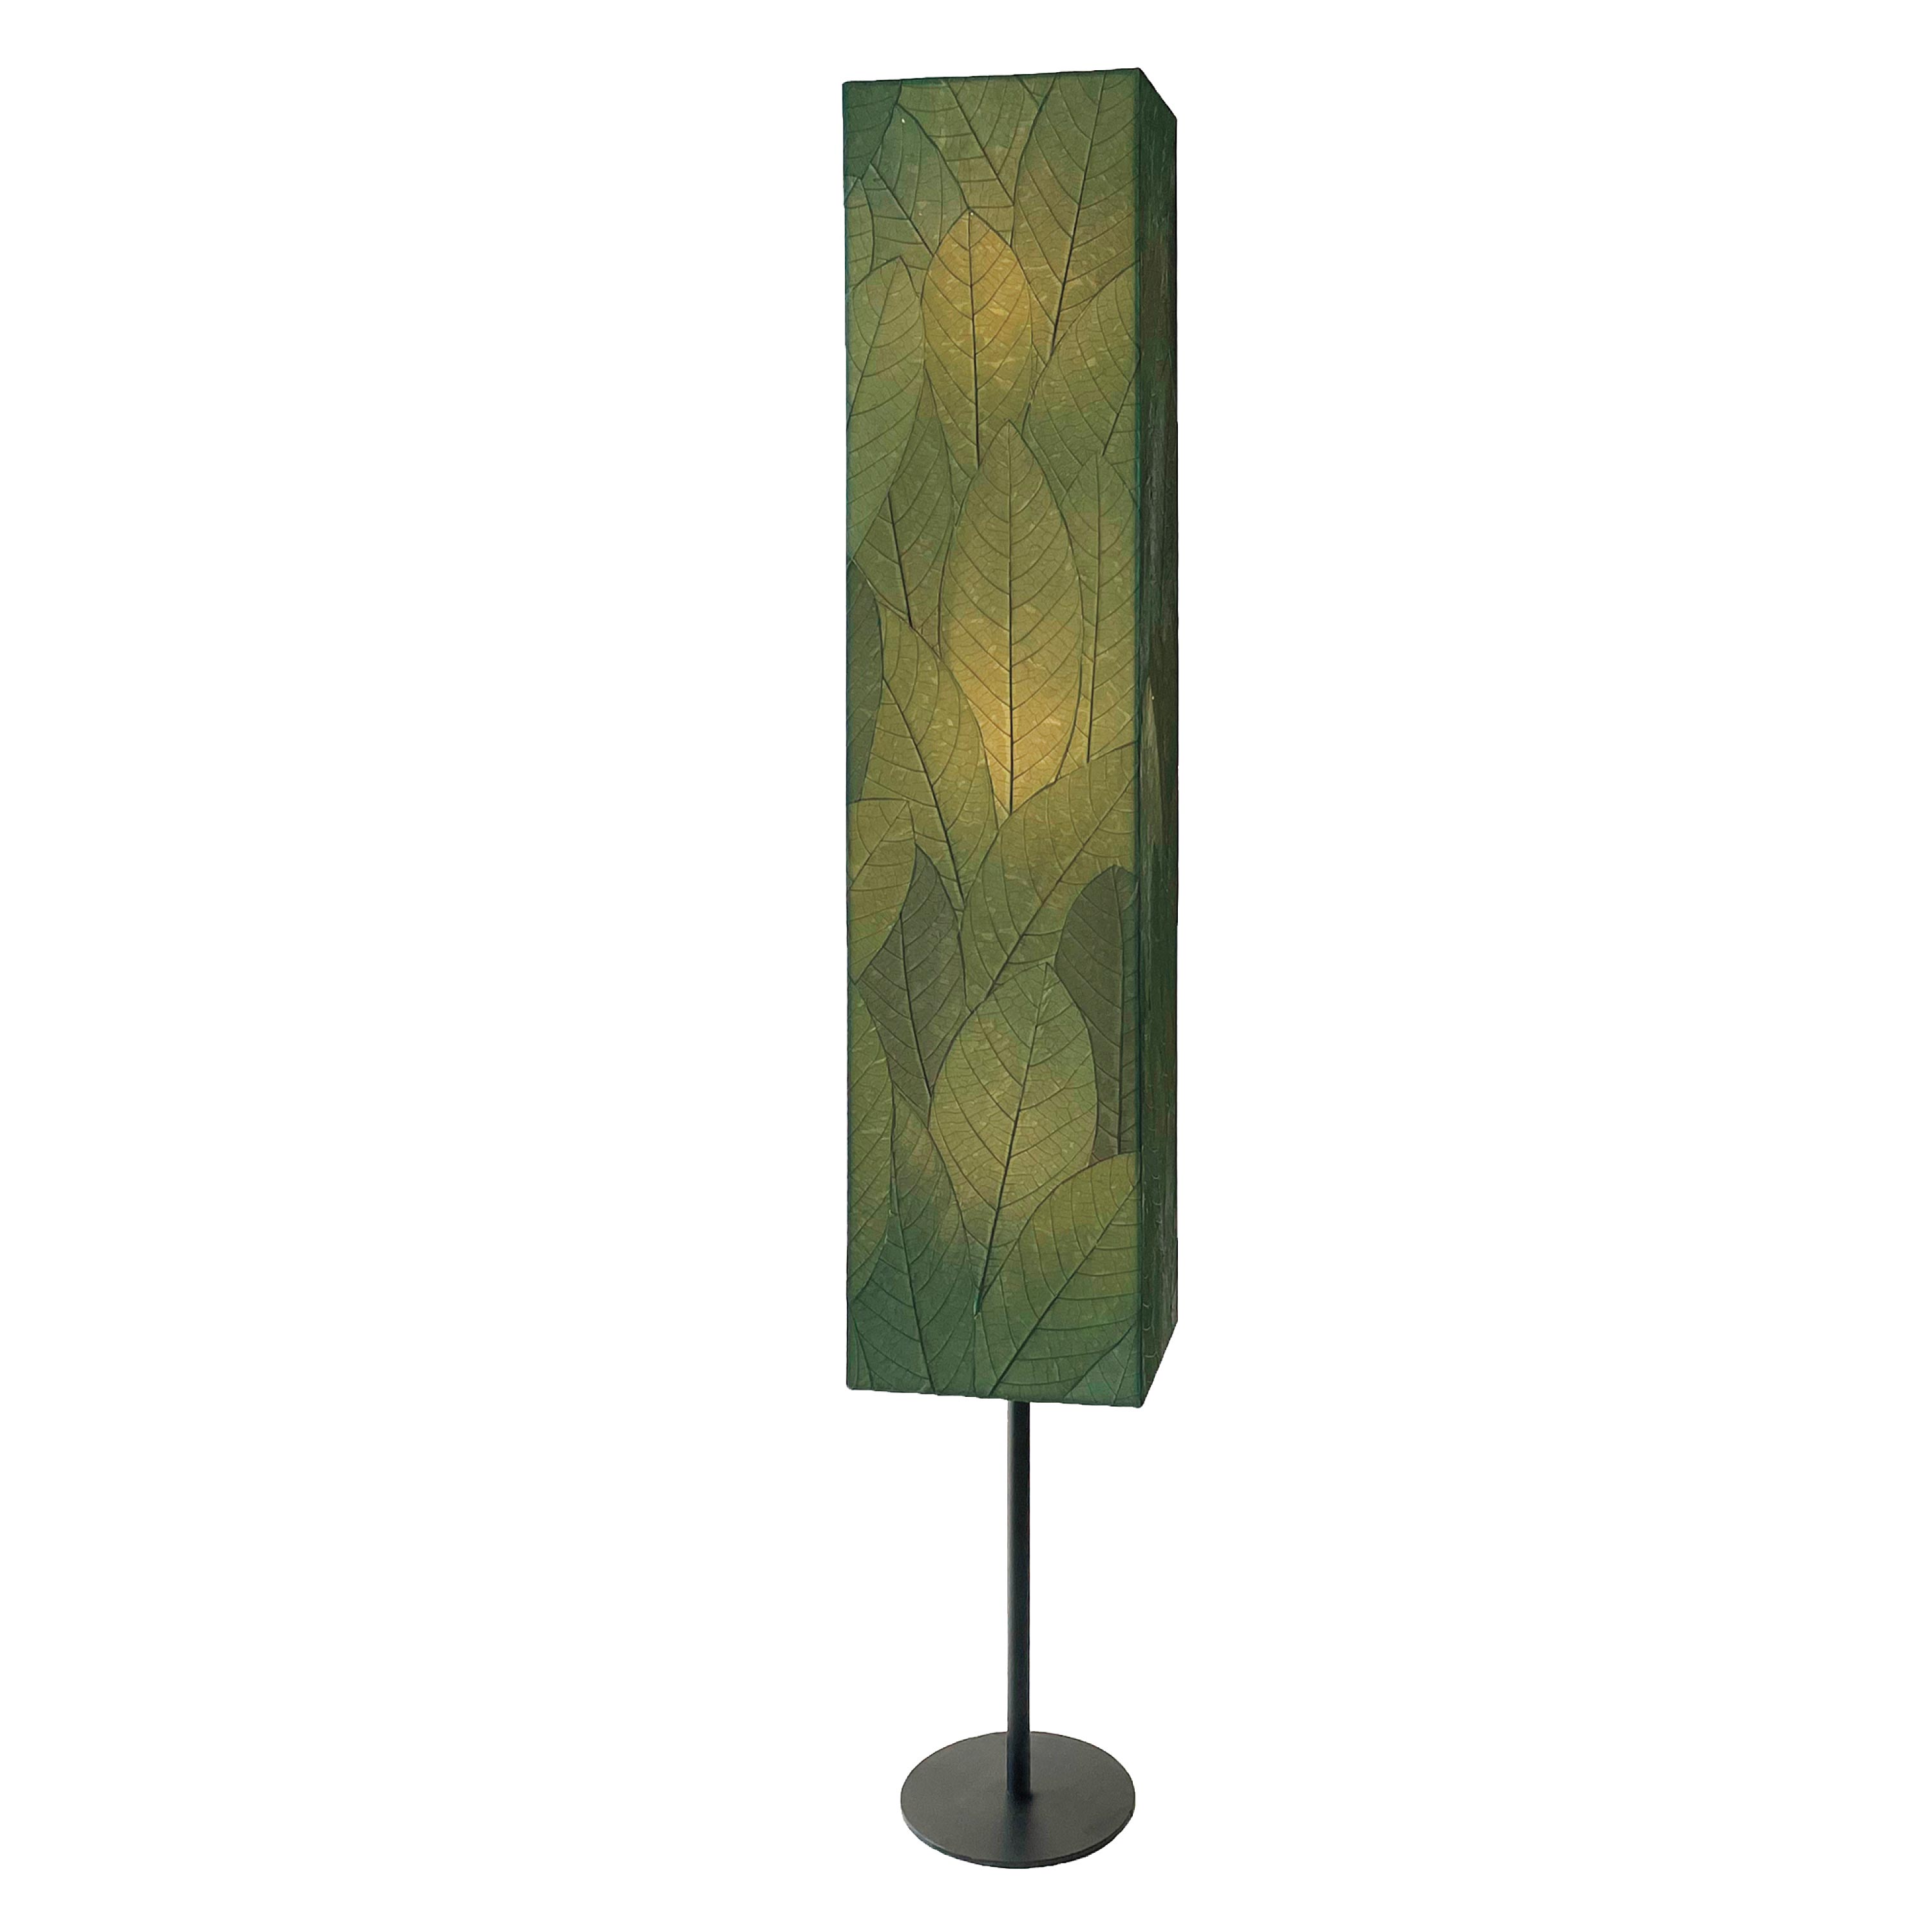 Sequoia Series Floor Lamp swatch image